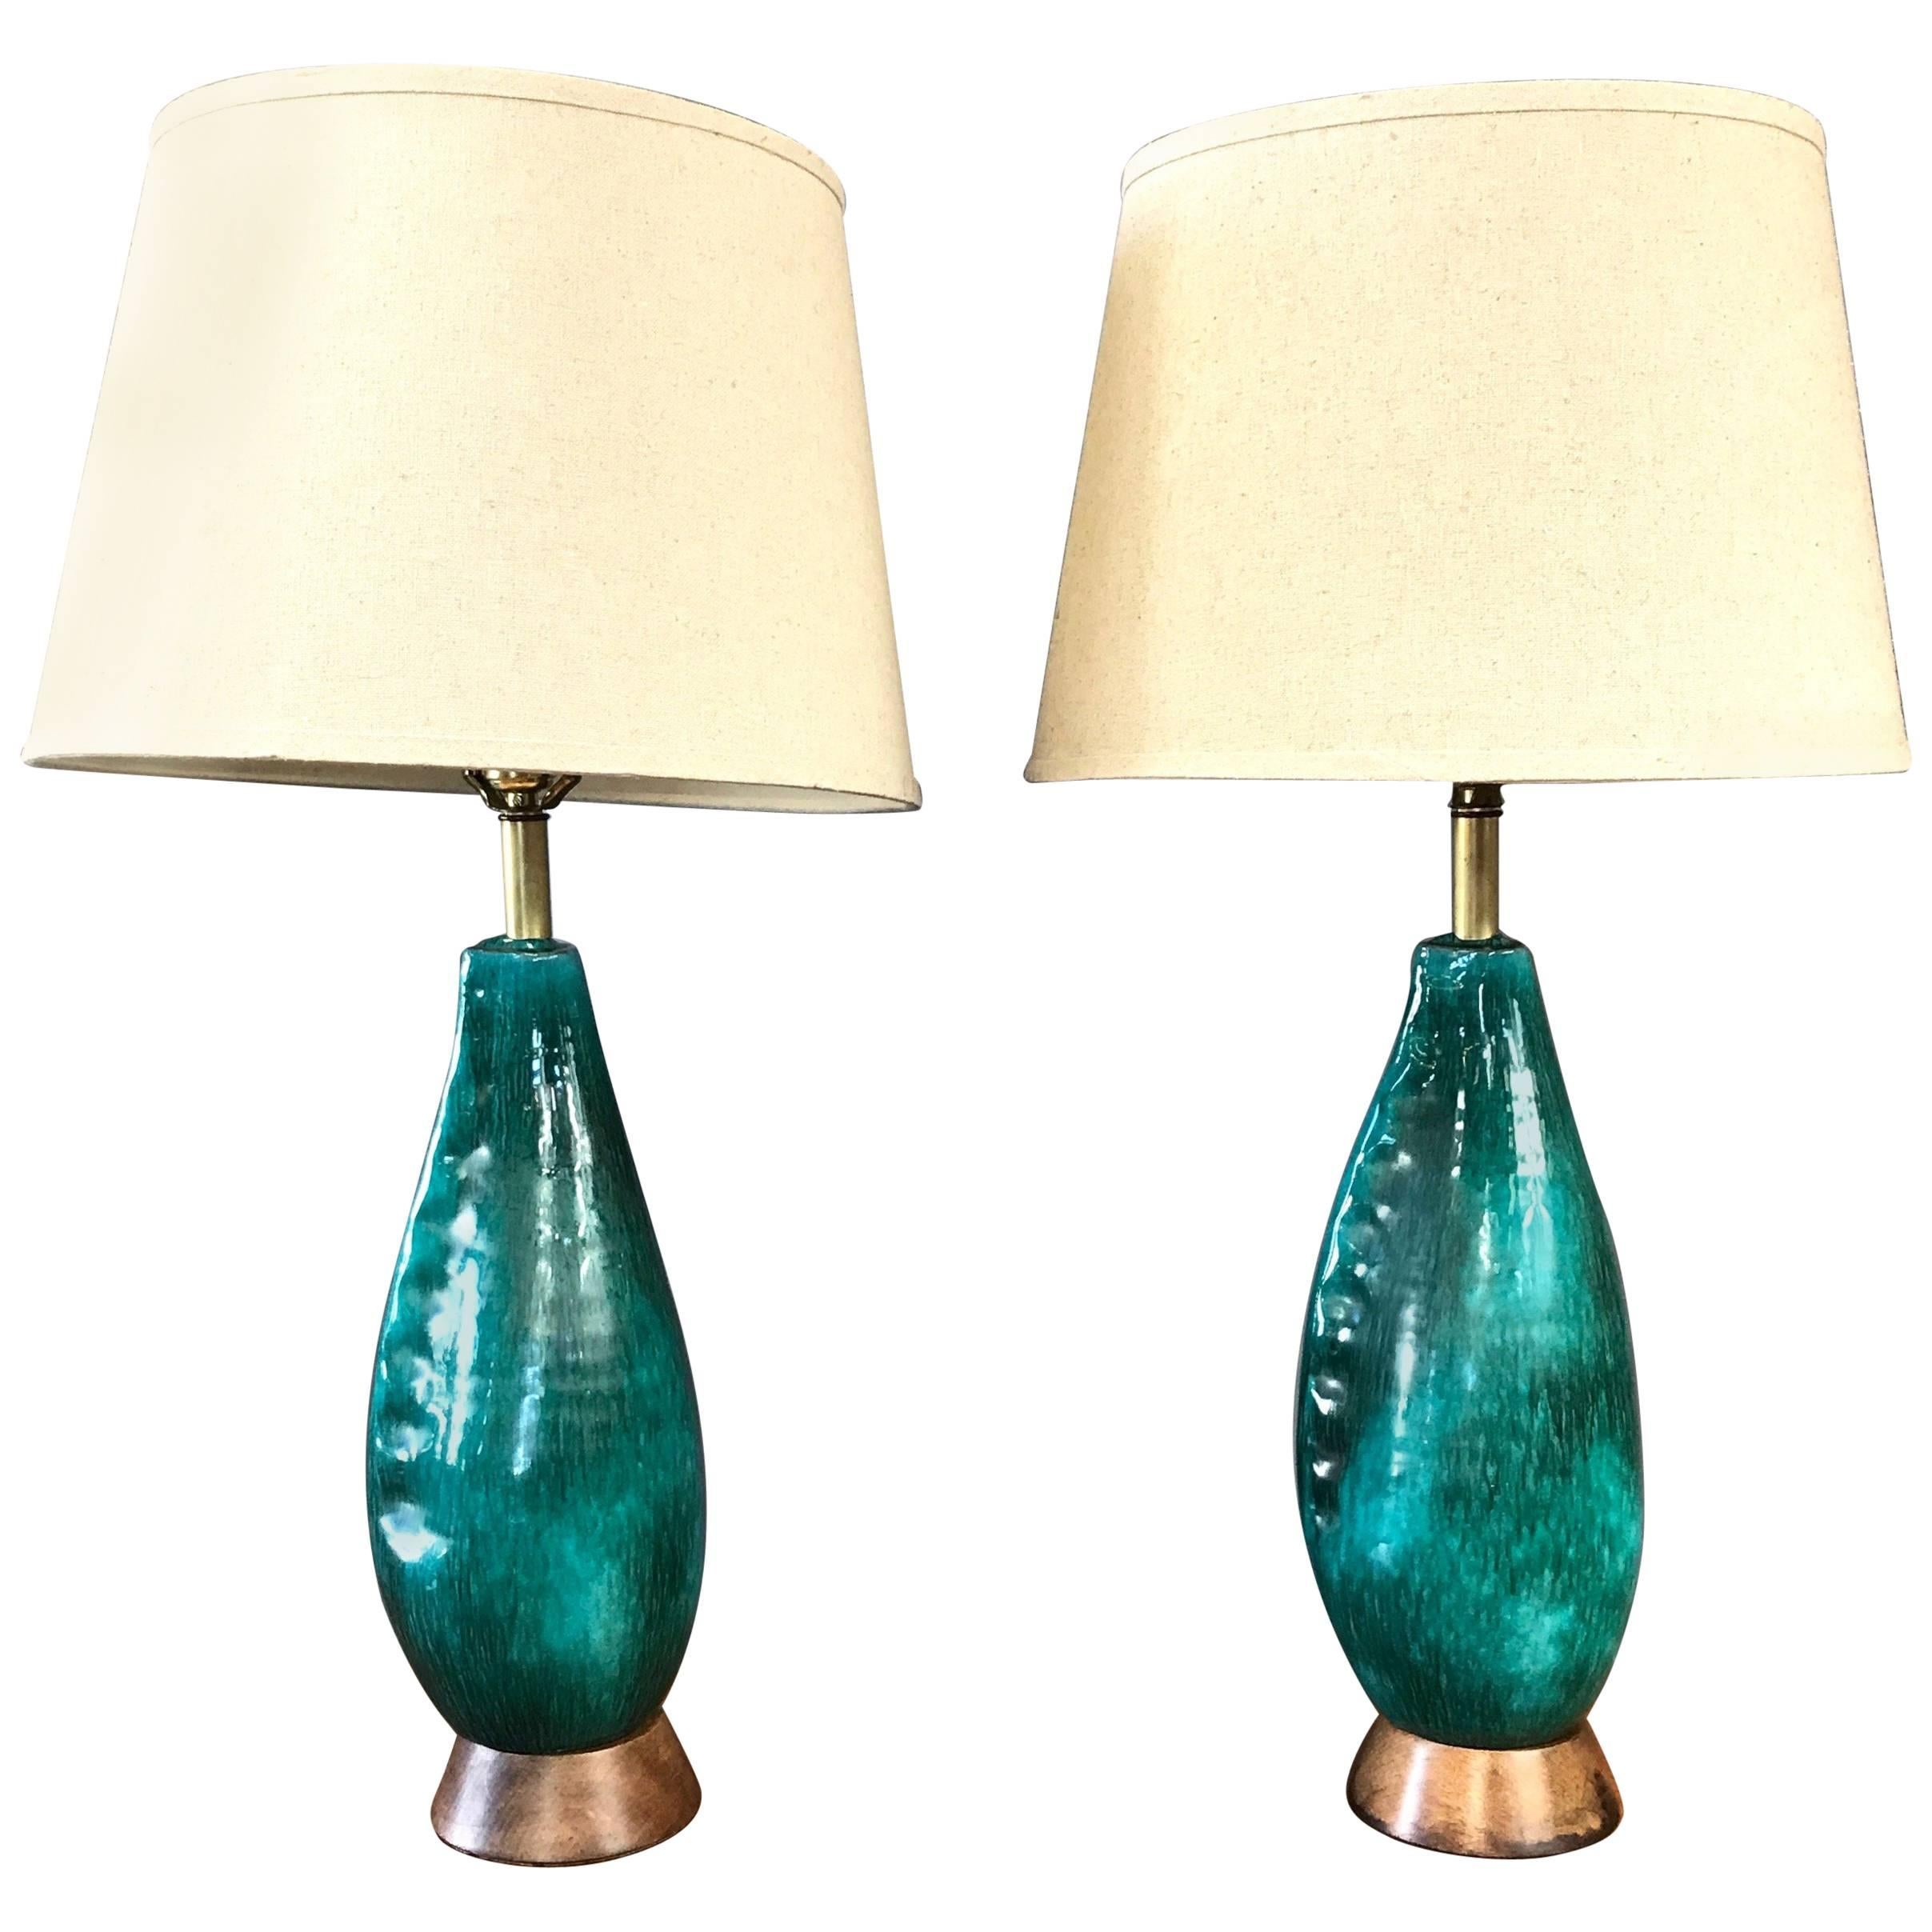 Pair of Marcello Fantoni Turquoise Ceramic Table Lamps